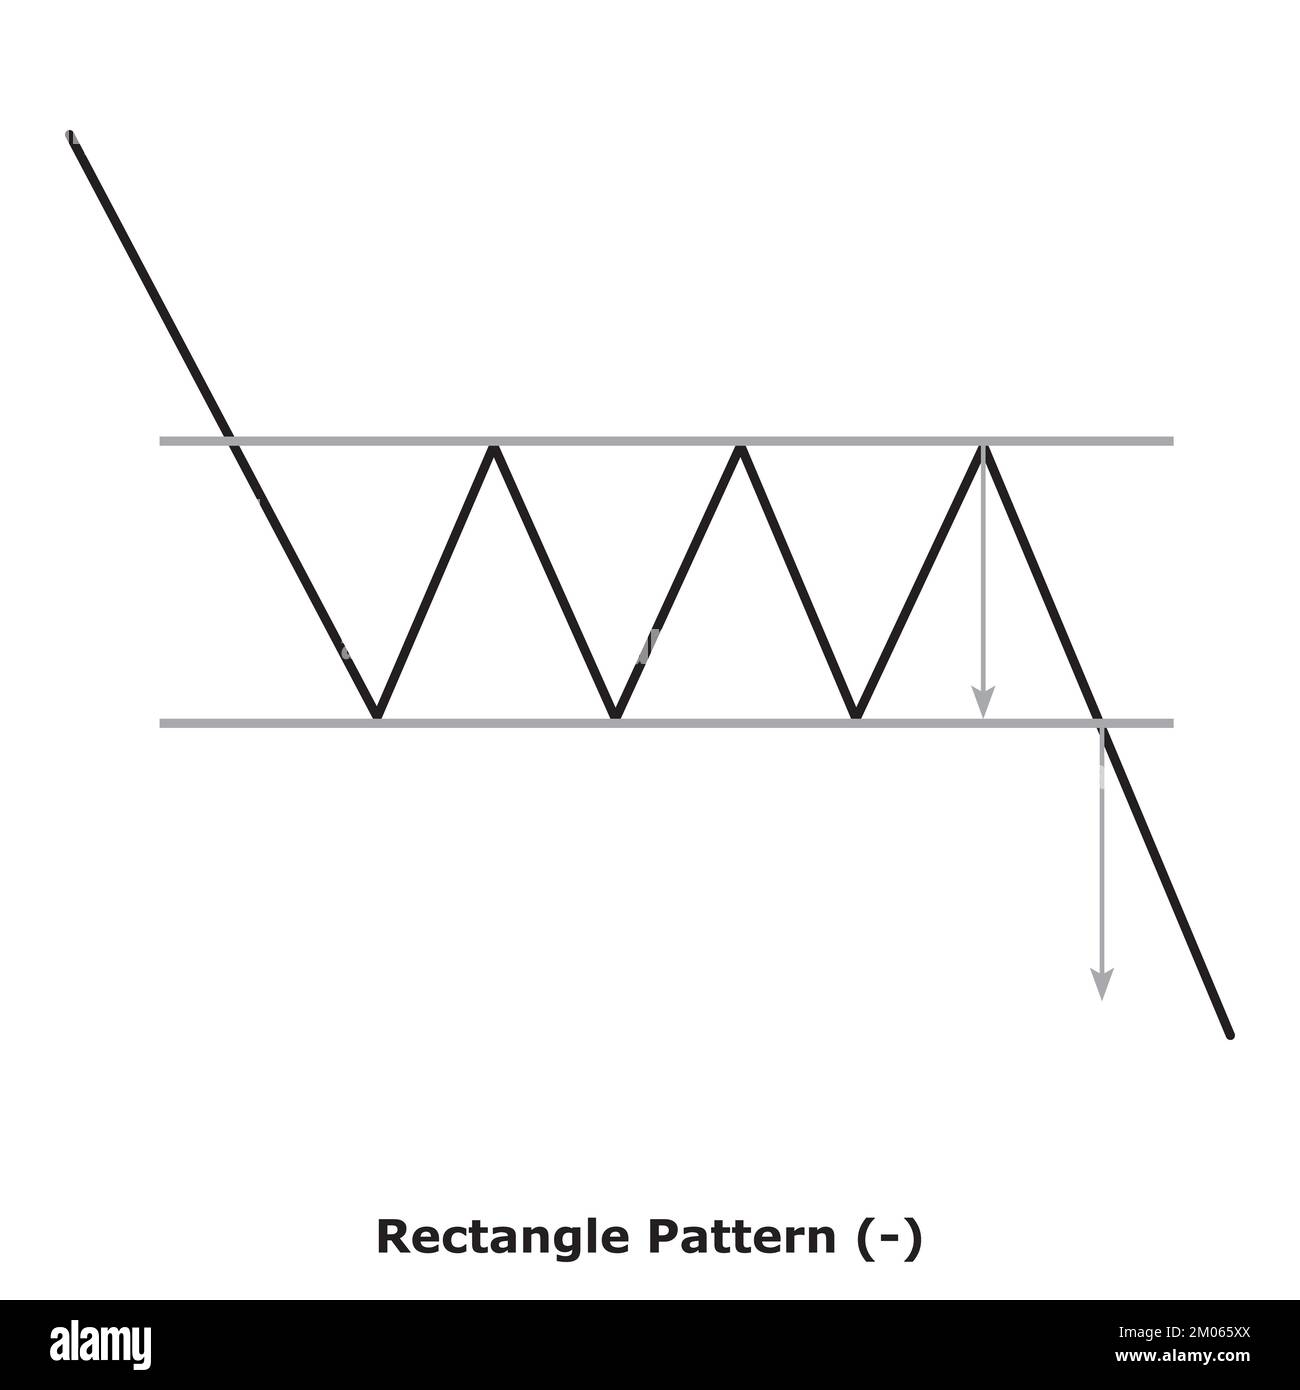 Rectangle Pattern - Bearish (-) - Small Illustration - White & Black - Bearish Continuation Chart Patterns - Technical Analysis Stock Vector